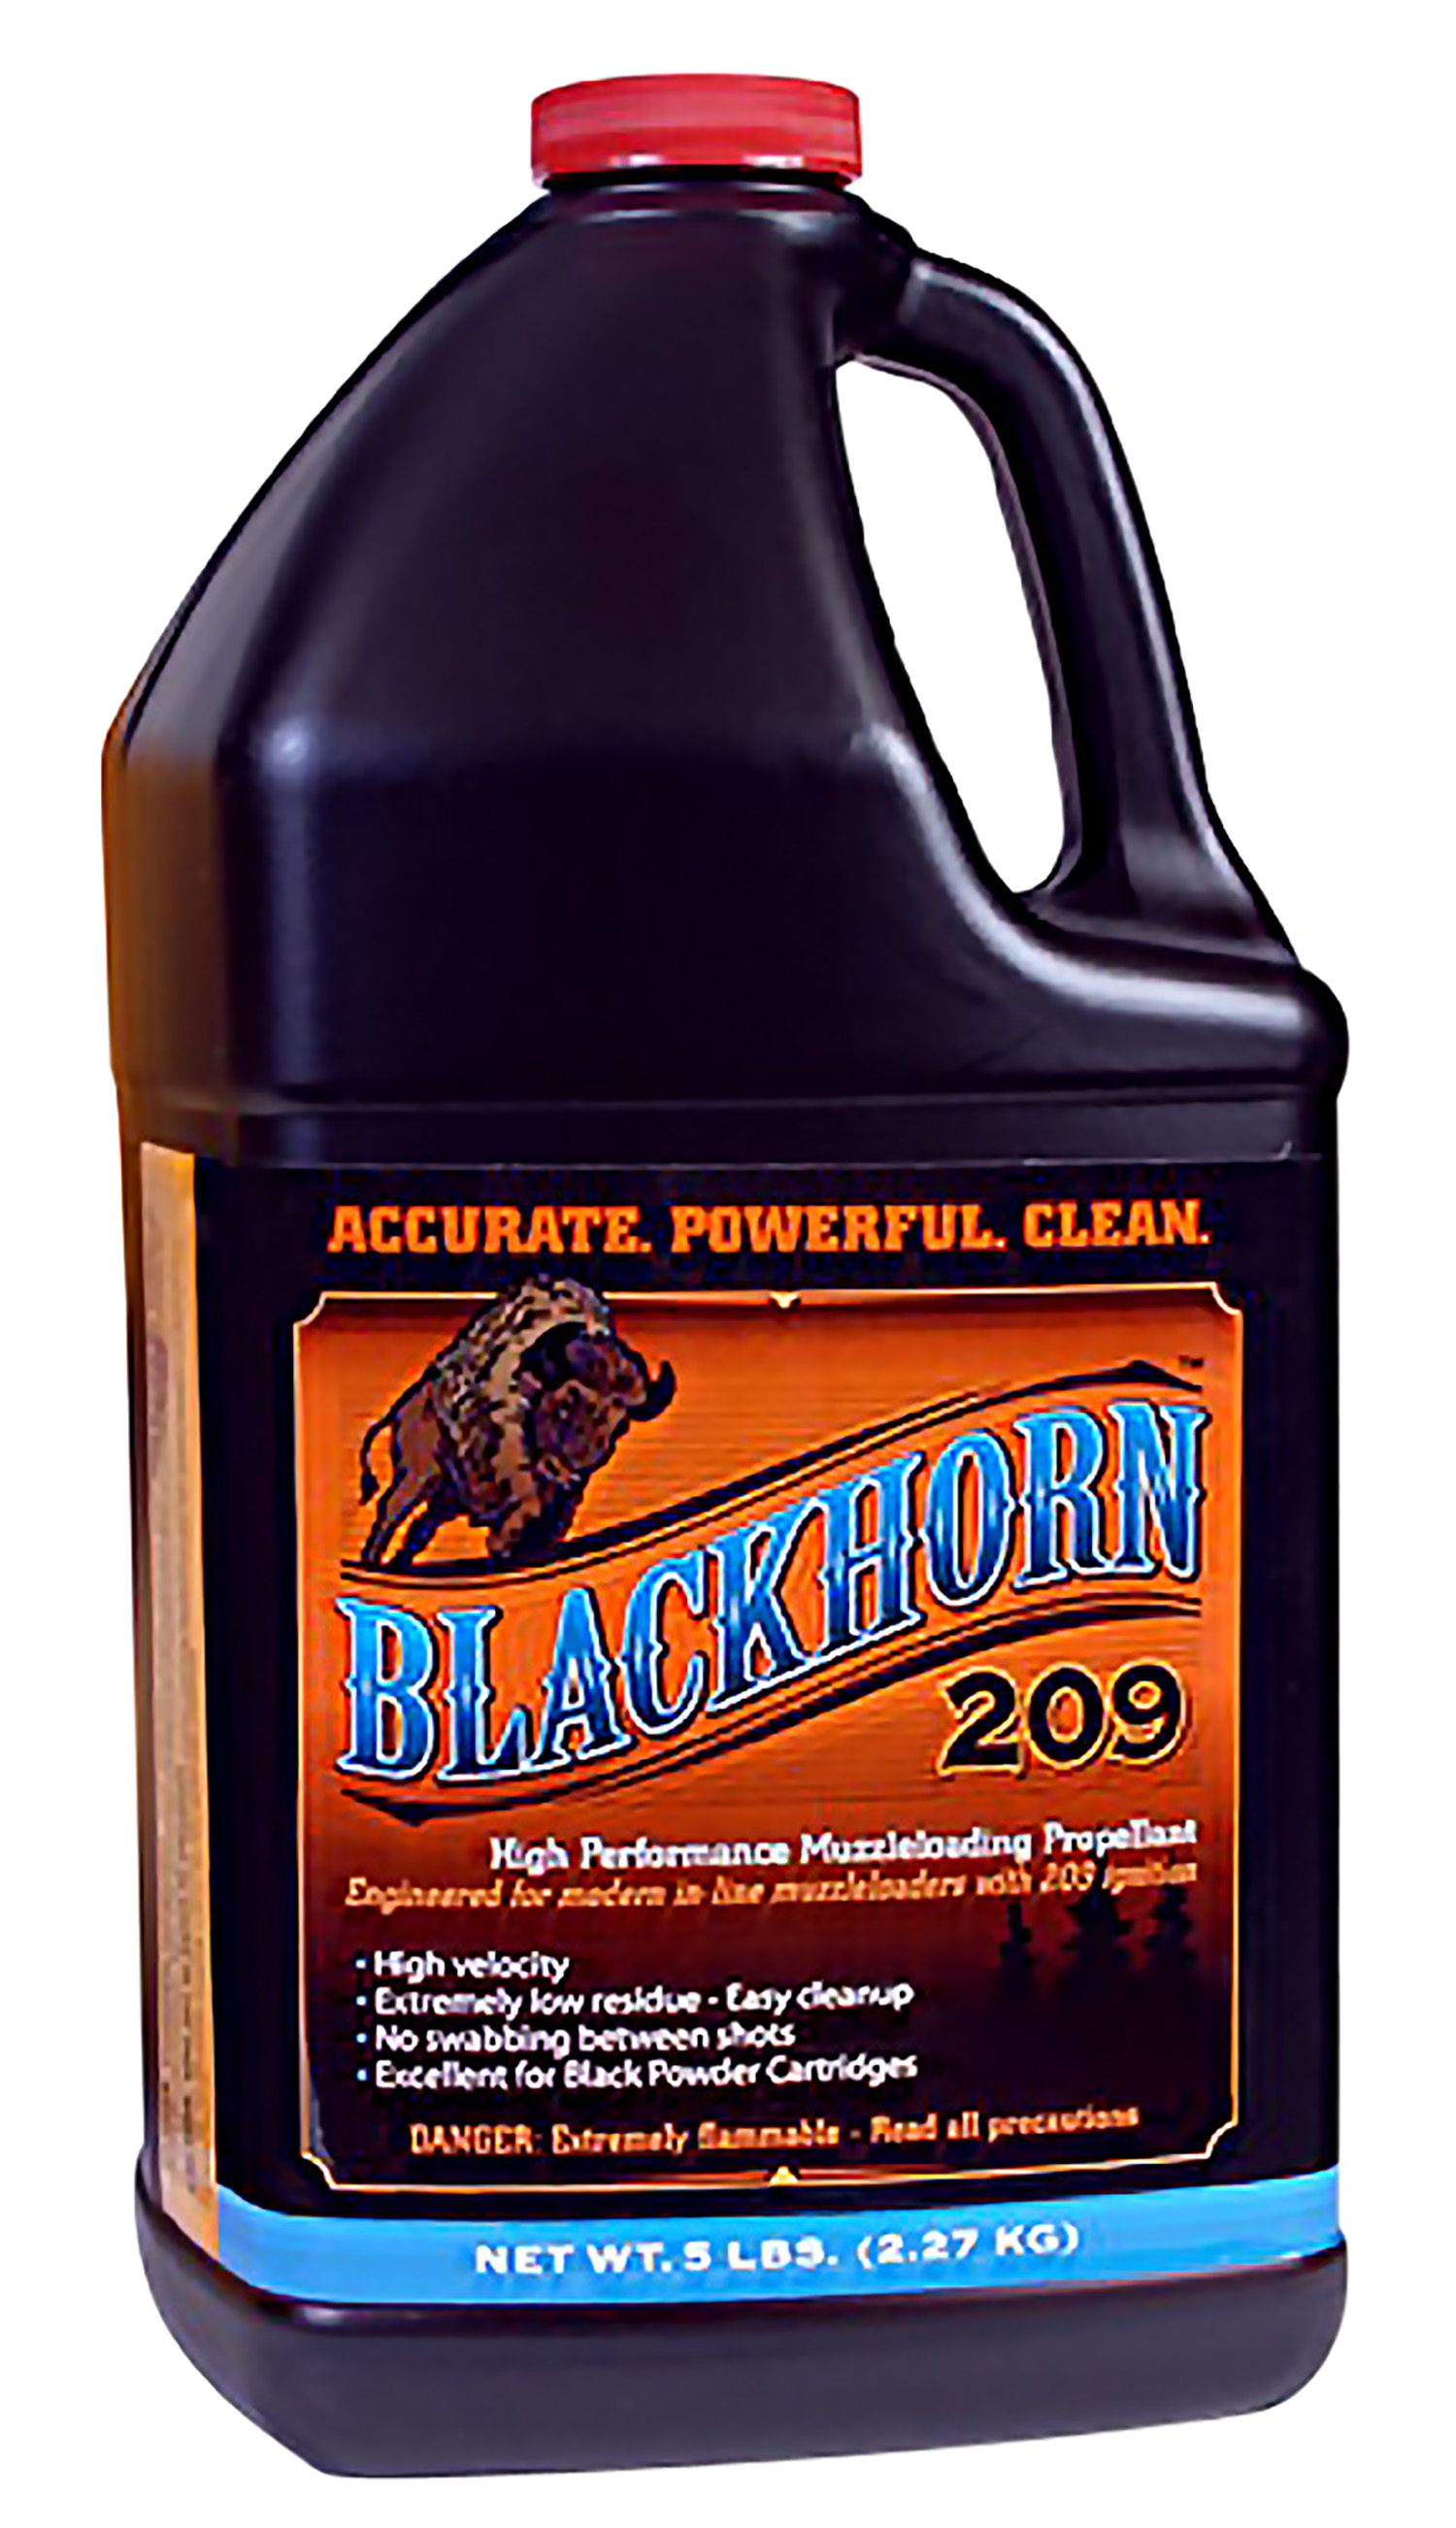 Winchester Powder BLACKHORN Muzzleloader Powder Blackhorn 209 5 lbs